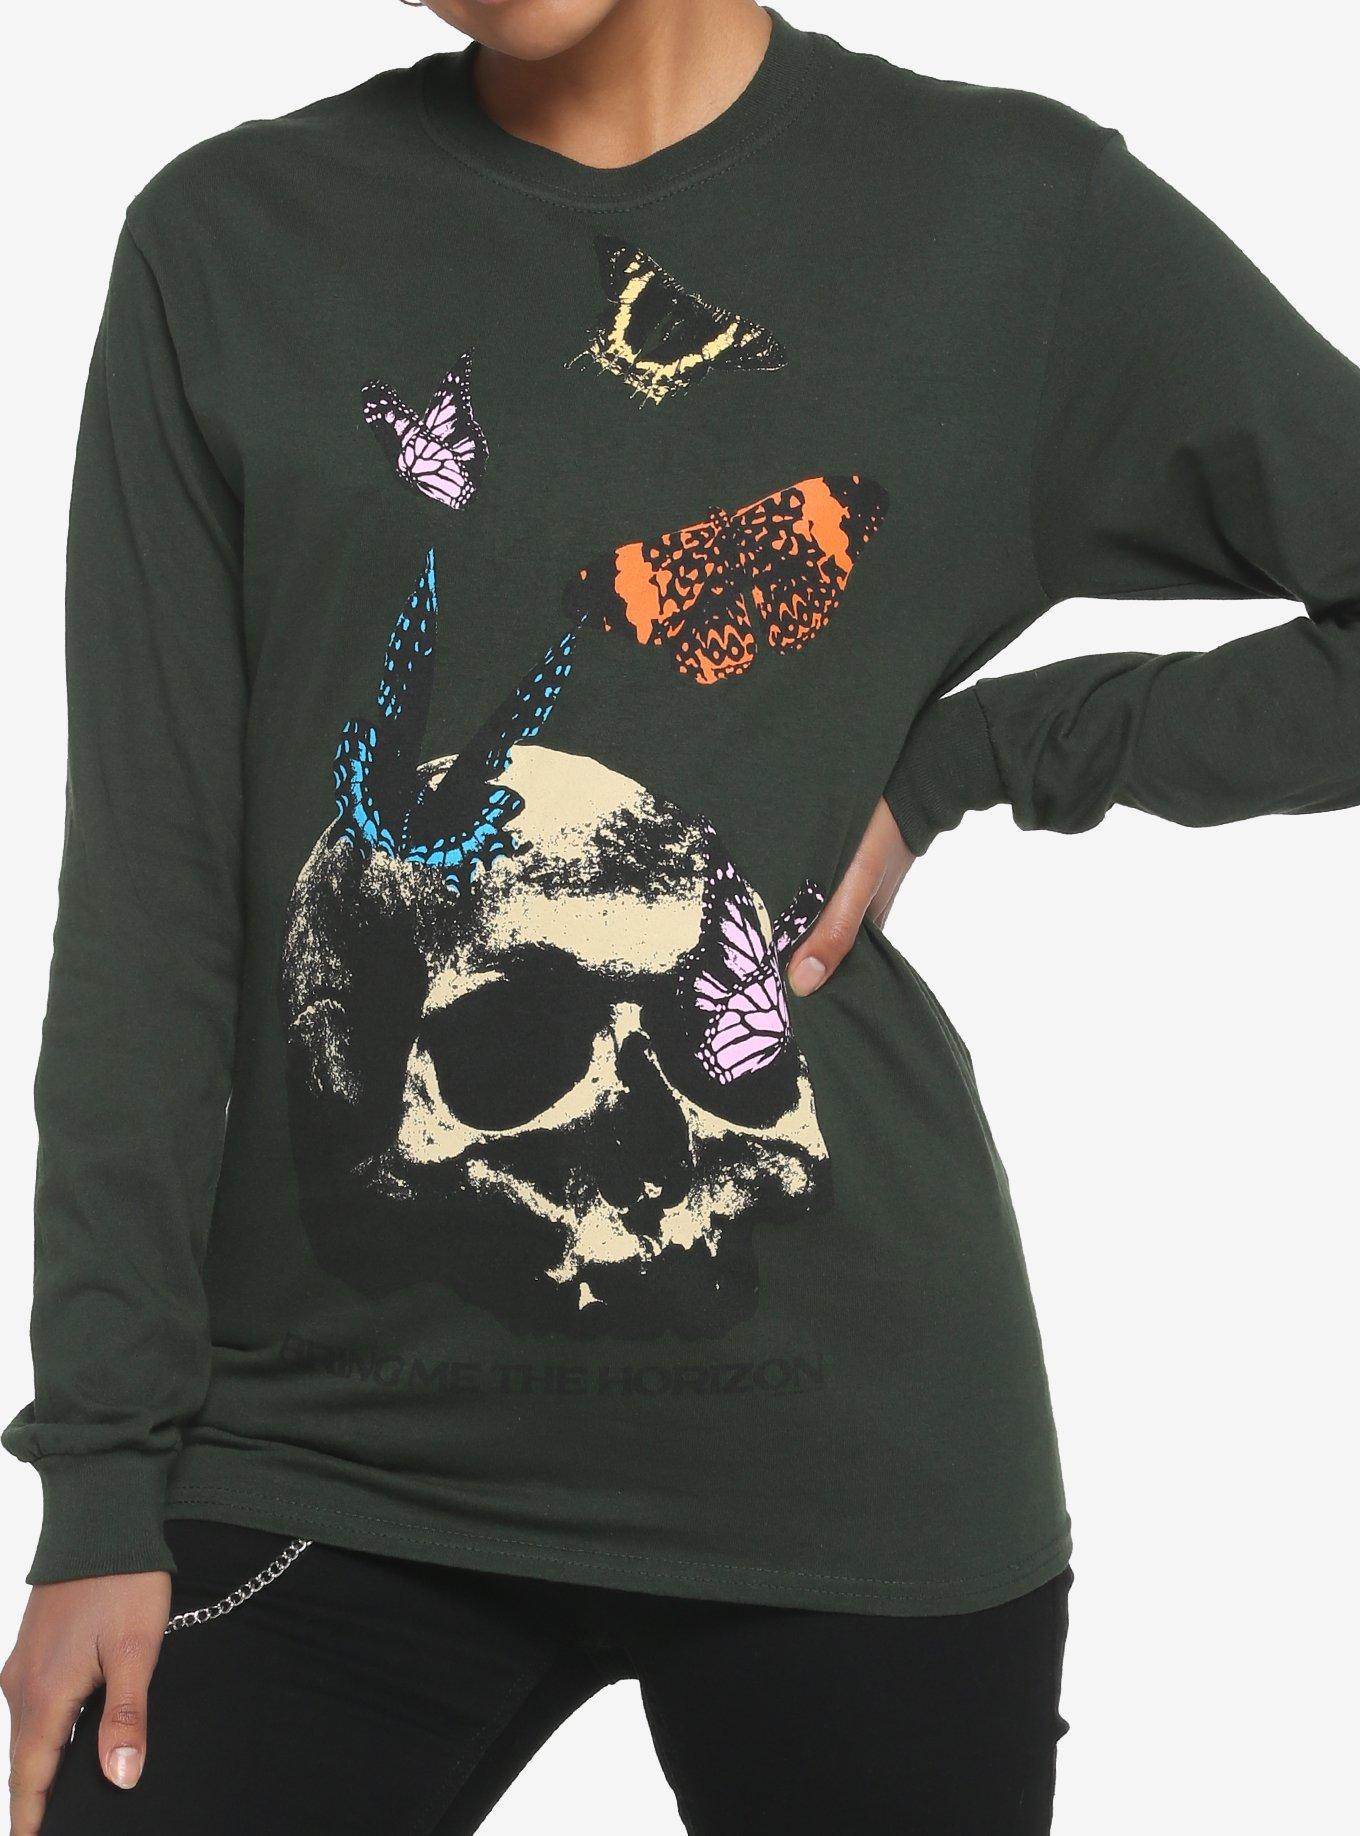 Bring Me The Horizon Butterfly Skull Girls Long-Sleeve T-Shirt